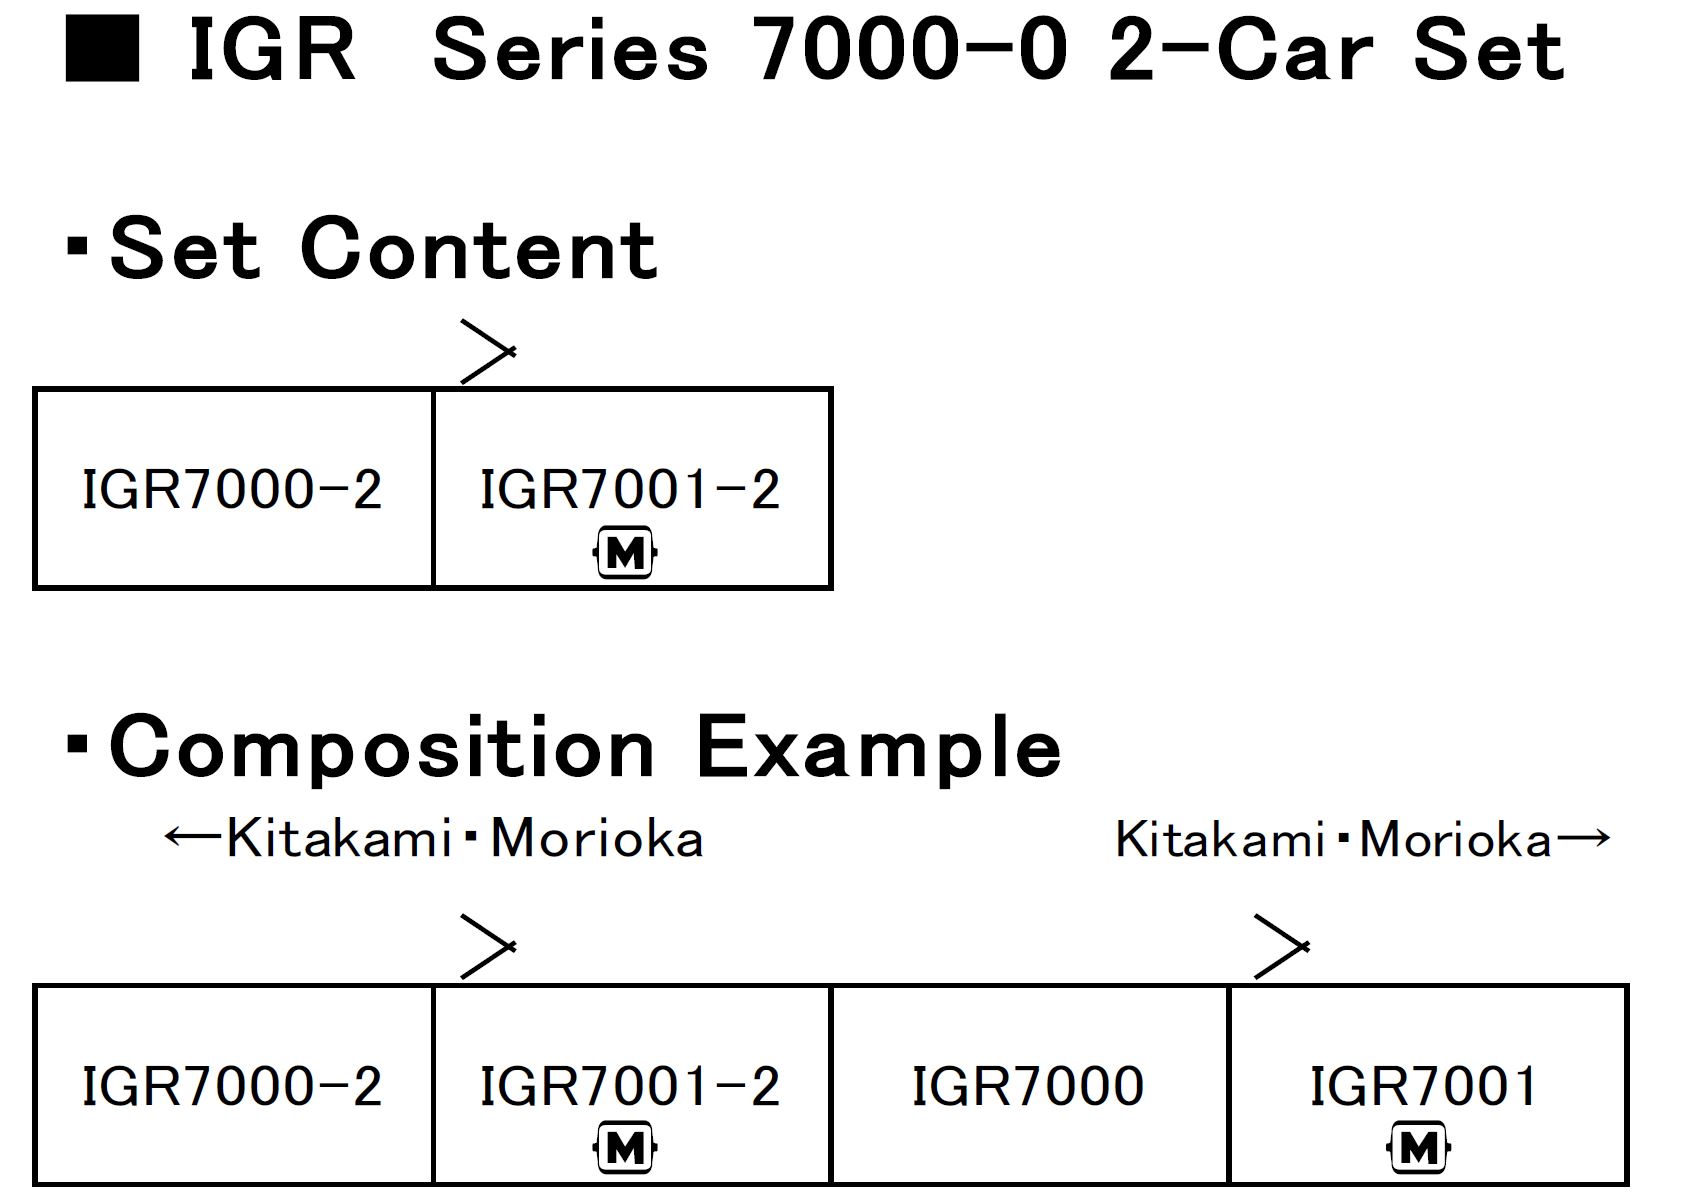 IGR Series 7000-0 2-Car Set (Content & Composition Example)